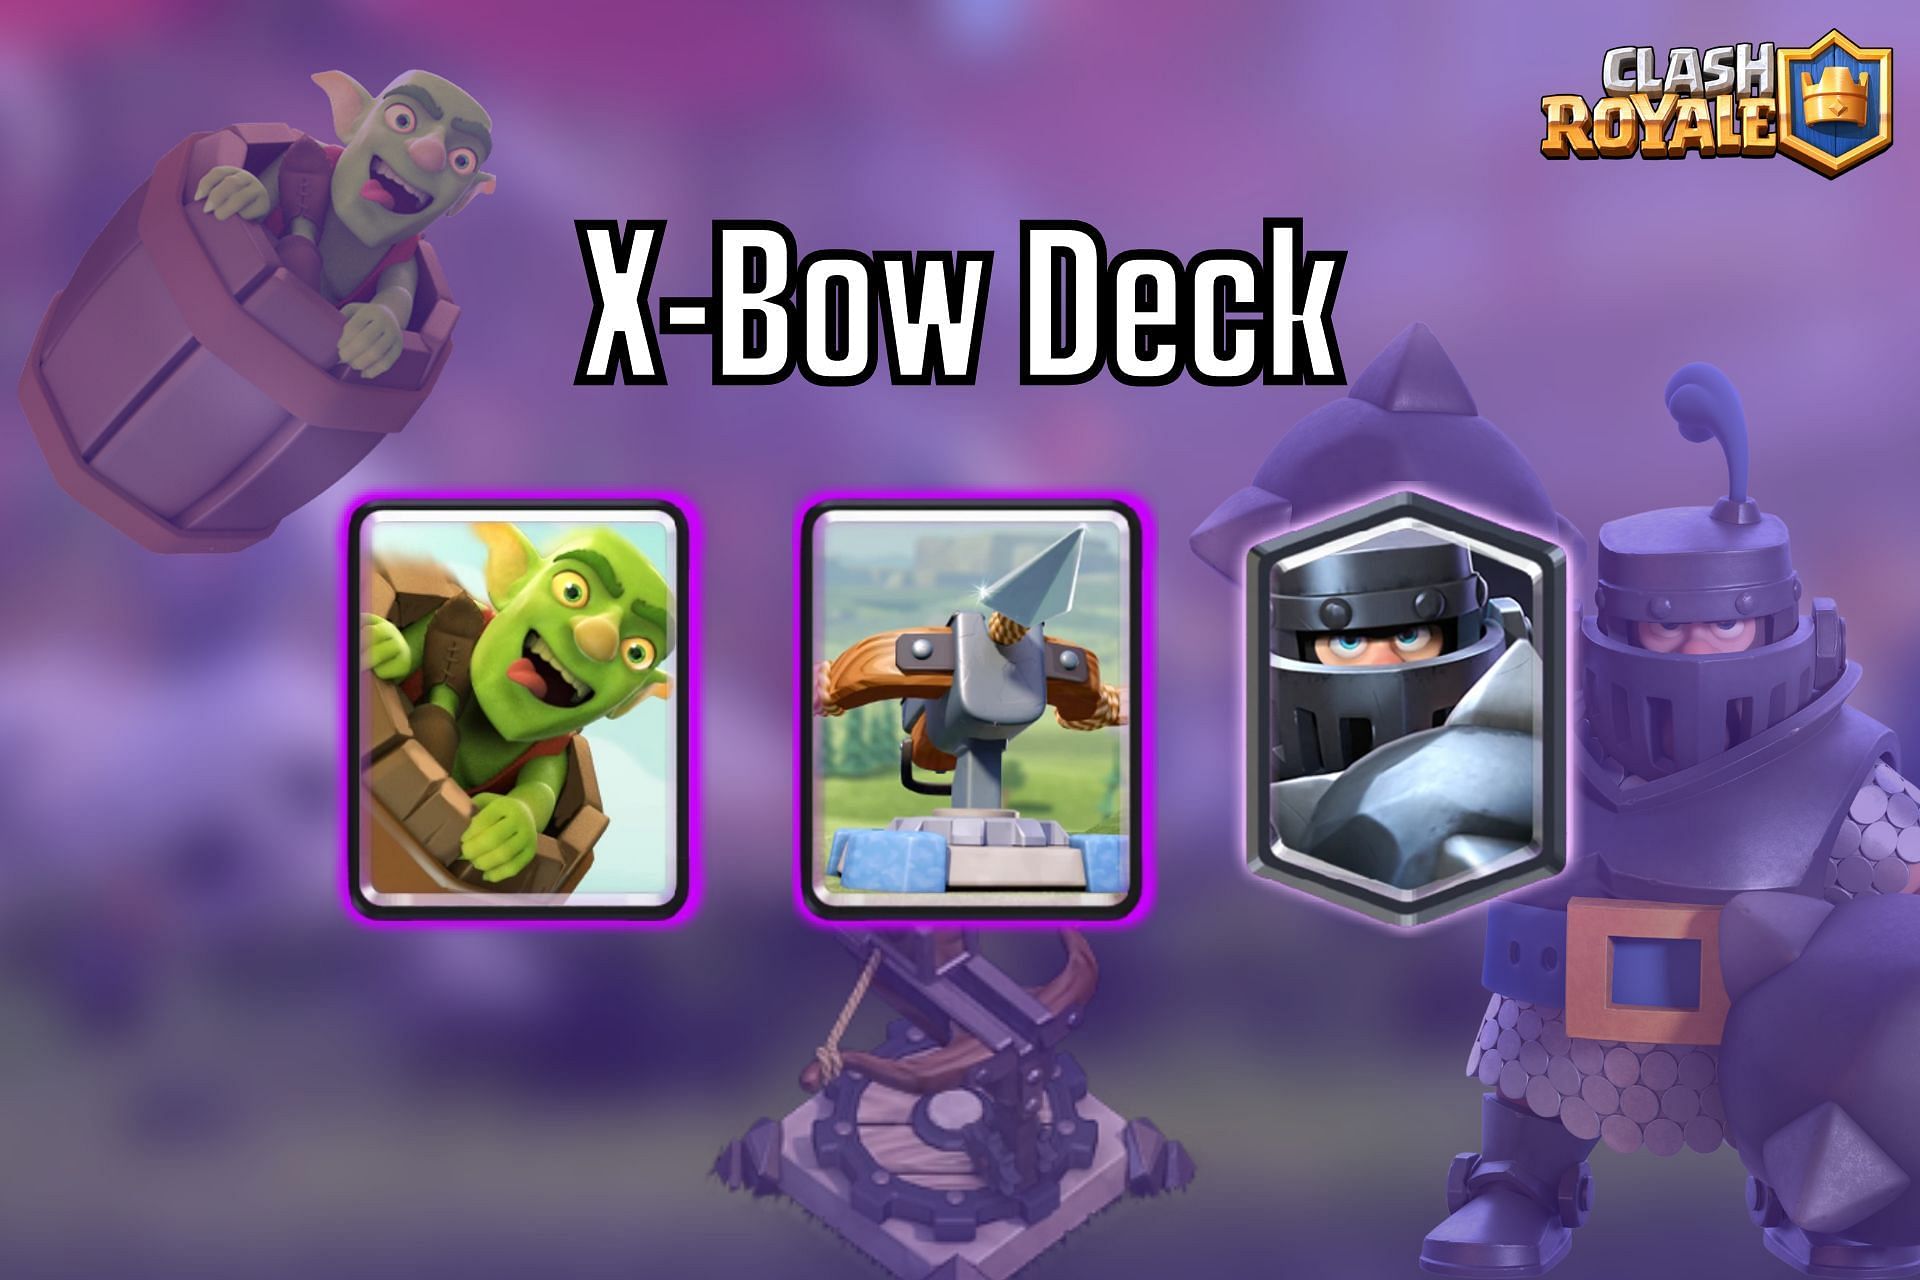 X-Bow Deck for Arena 13  Clash royale deck, Deck, Cool deck